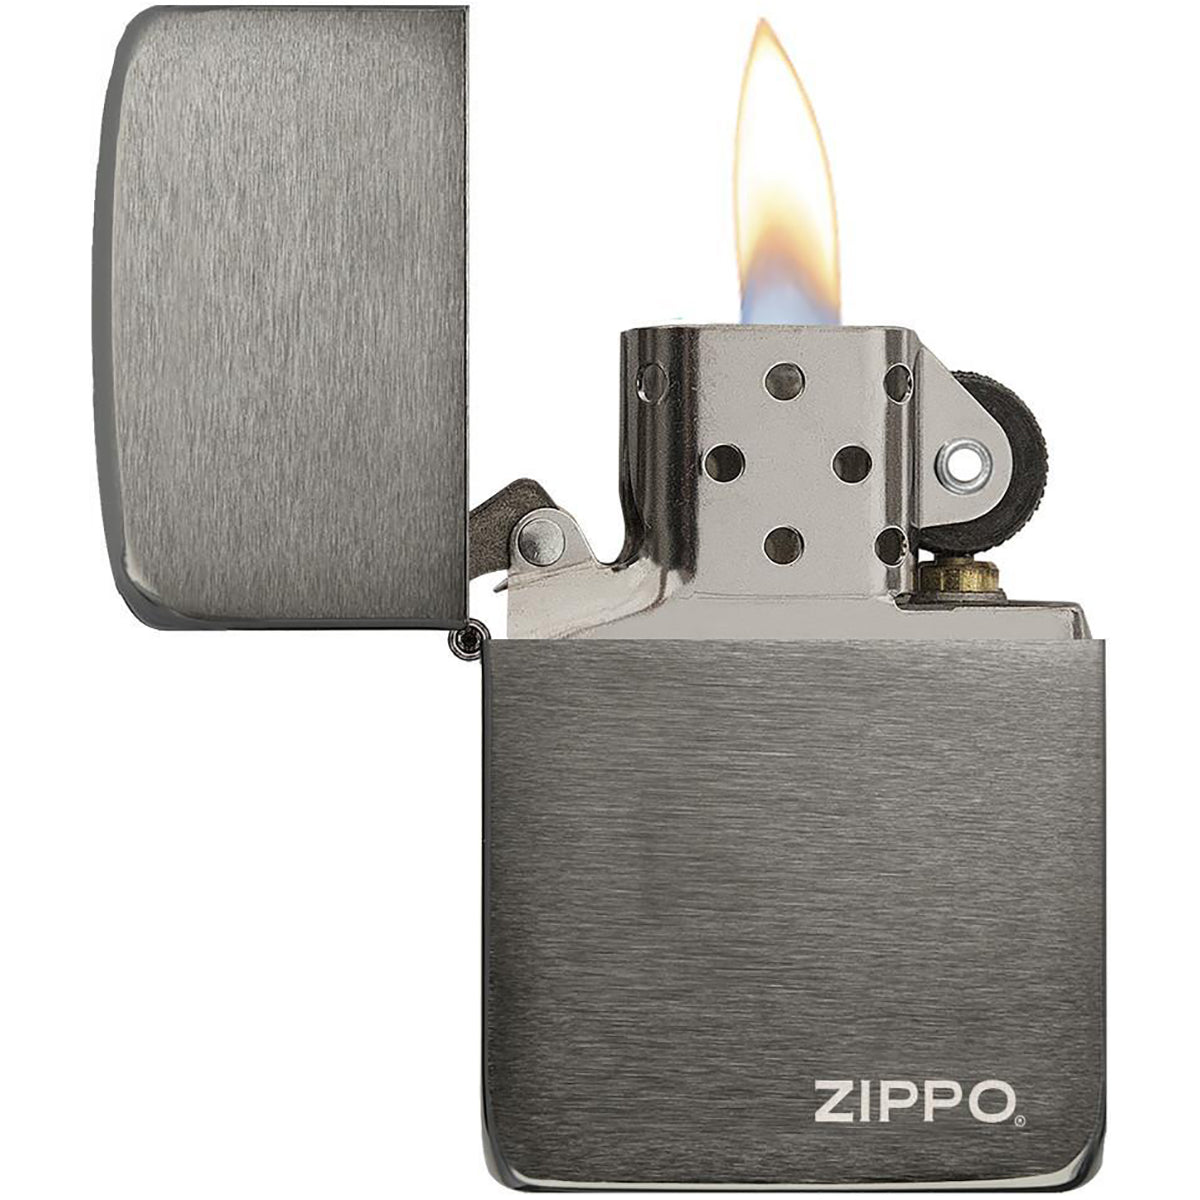 Zippo 1941 Replica Pocket Lighter with Logo - Black Ice Zippo